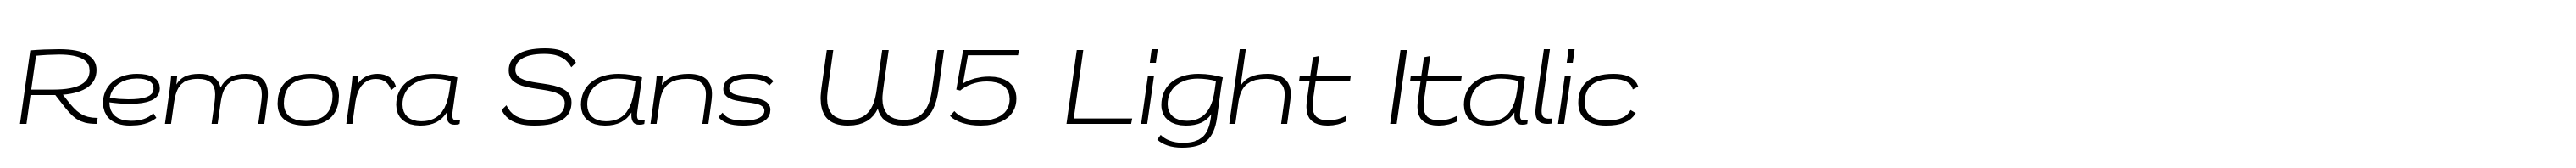 Remora Sans W5 Light Italic